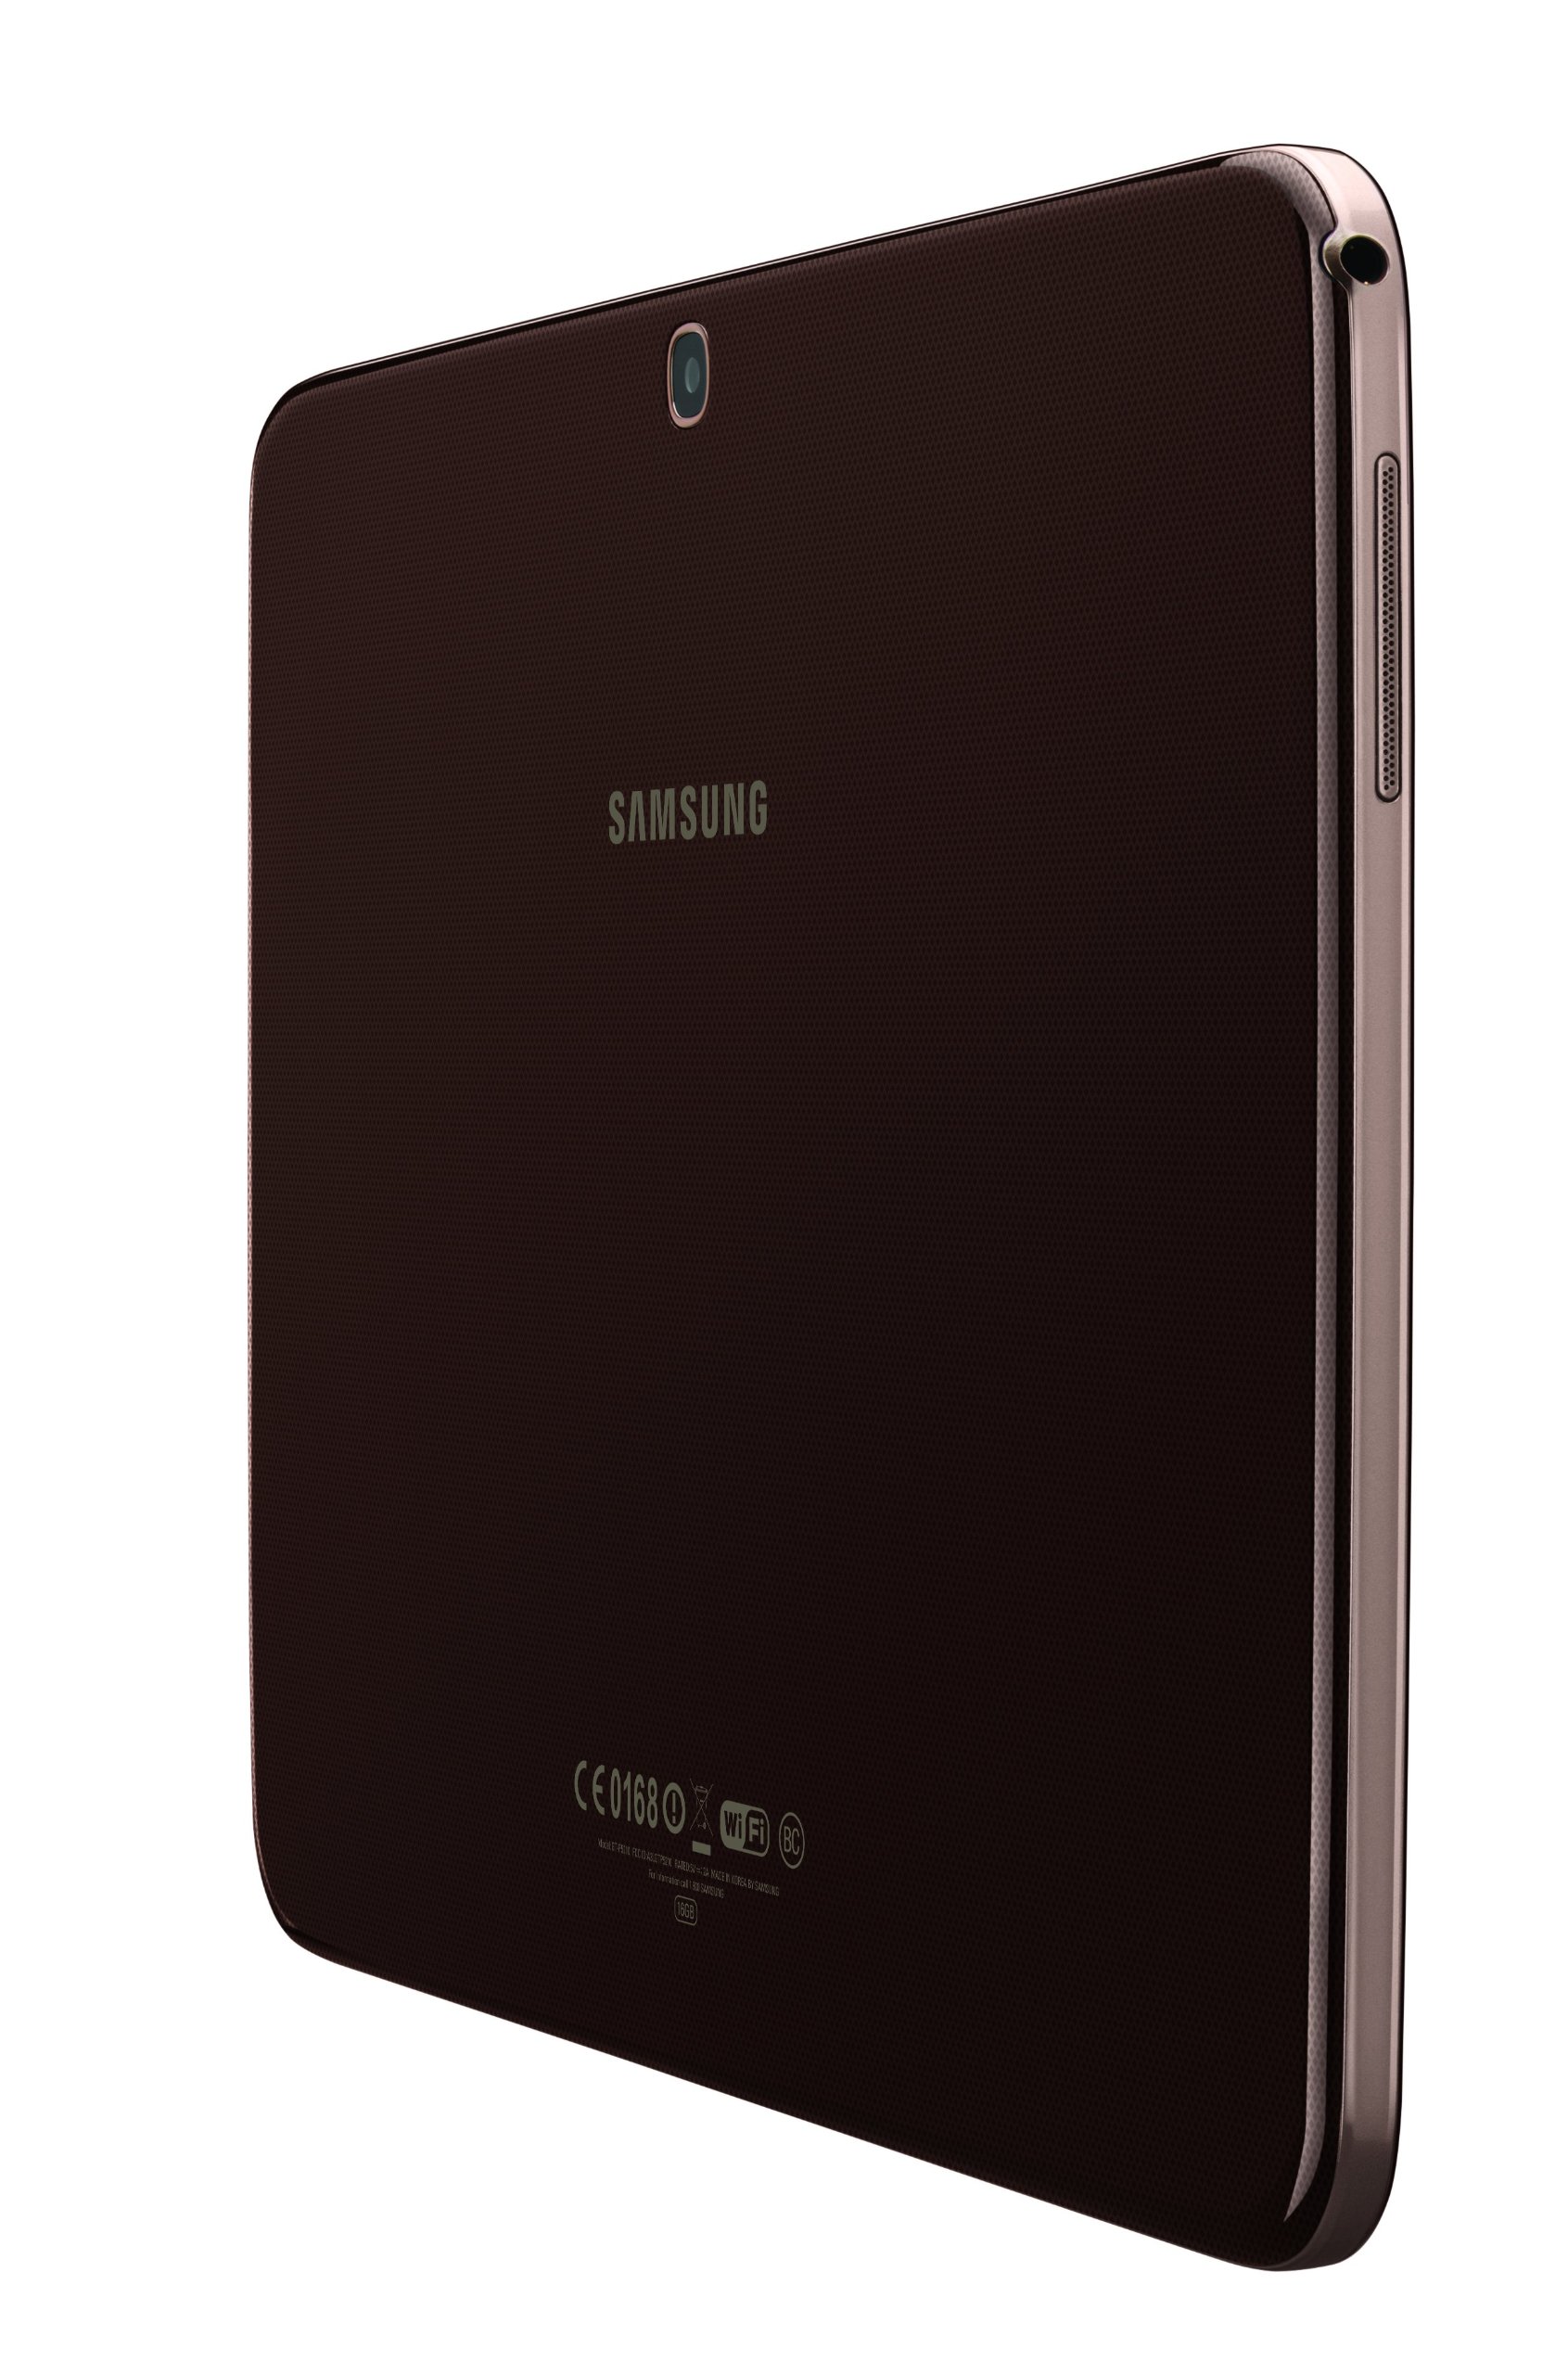 Samsung Galaxy Tab 3 GT-P5210GNYXAR 10.1", 16GB, Wi-Fi Tablet (Gold Brown)